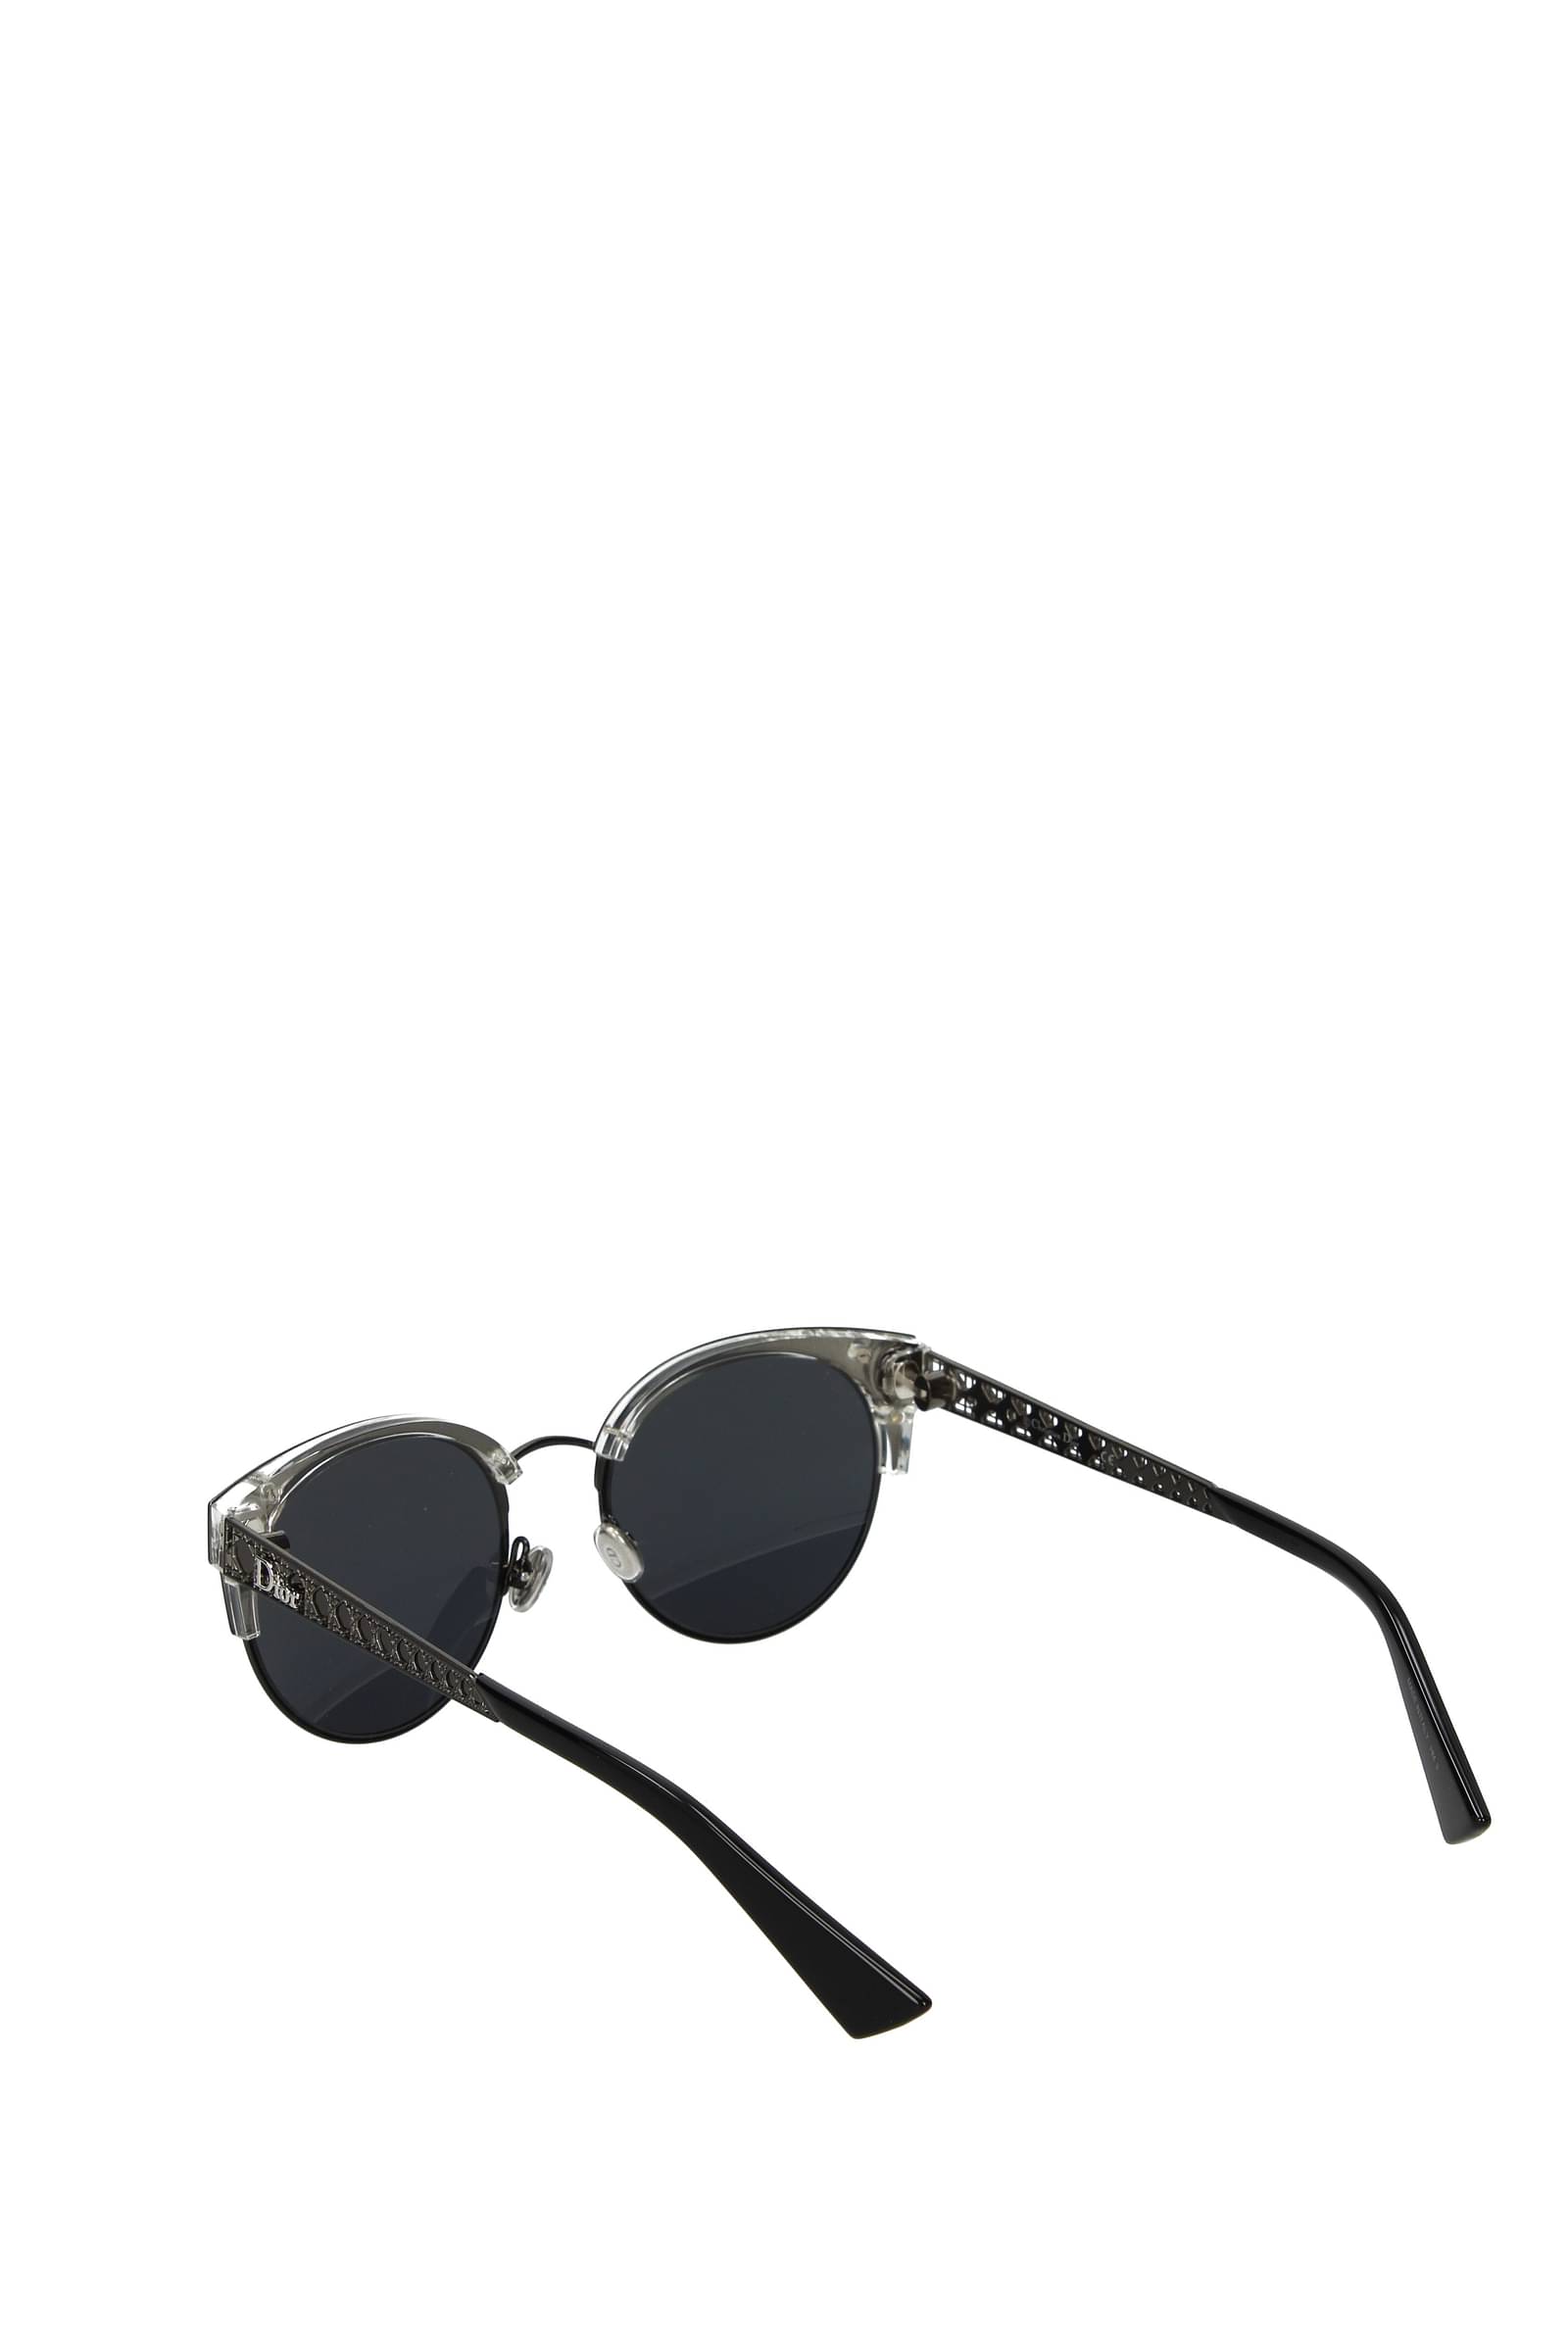 Sunglasses Metal Gray Black - Christian Dior - Women